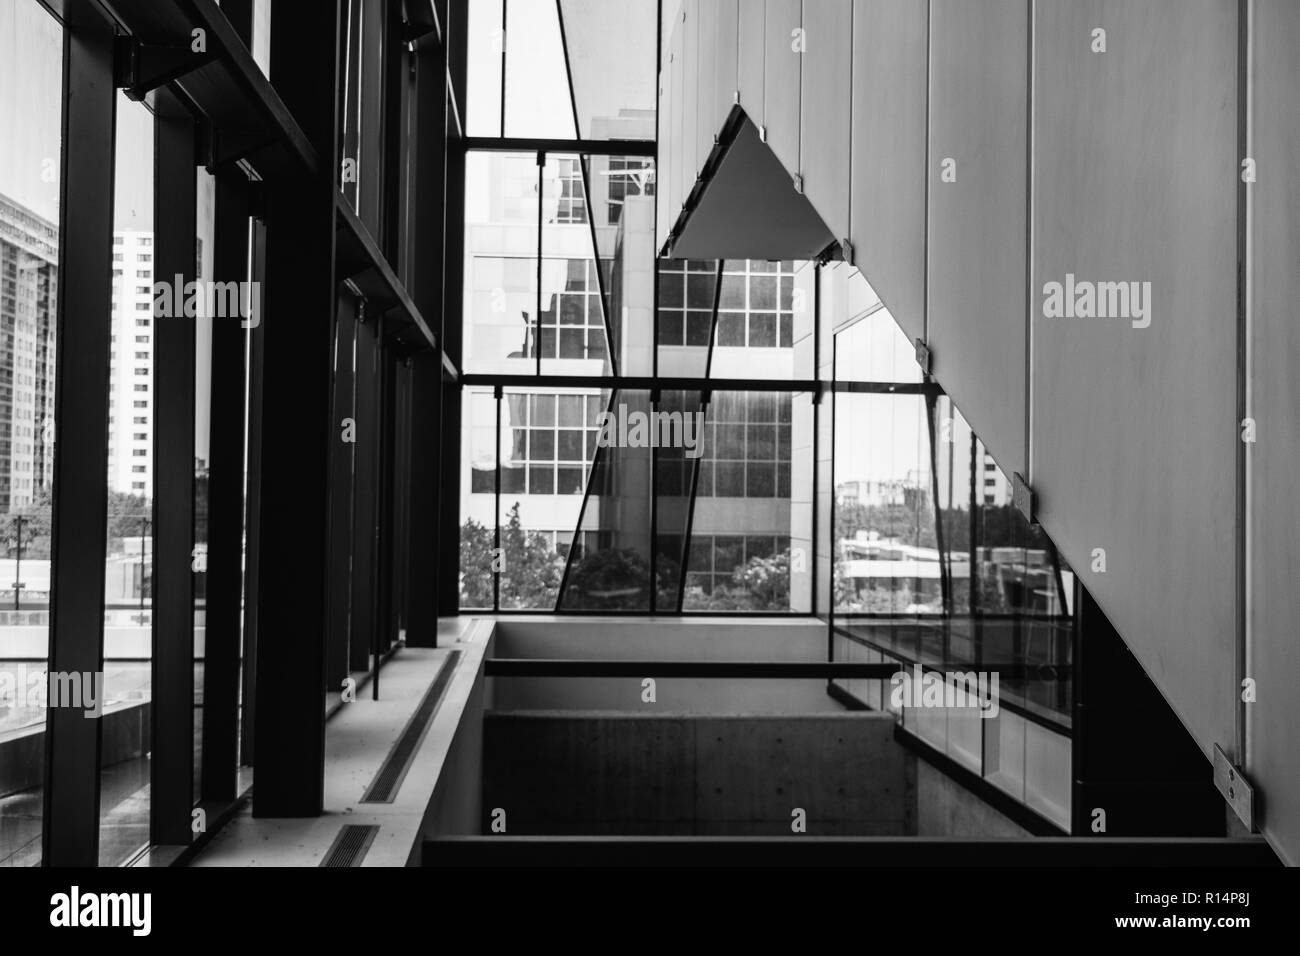 Longueuil, QC, Canada - 24-09-2018 - University of Sherbrooke - Architecture inside Stock Photo